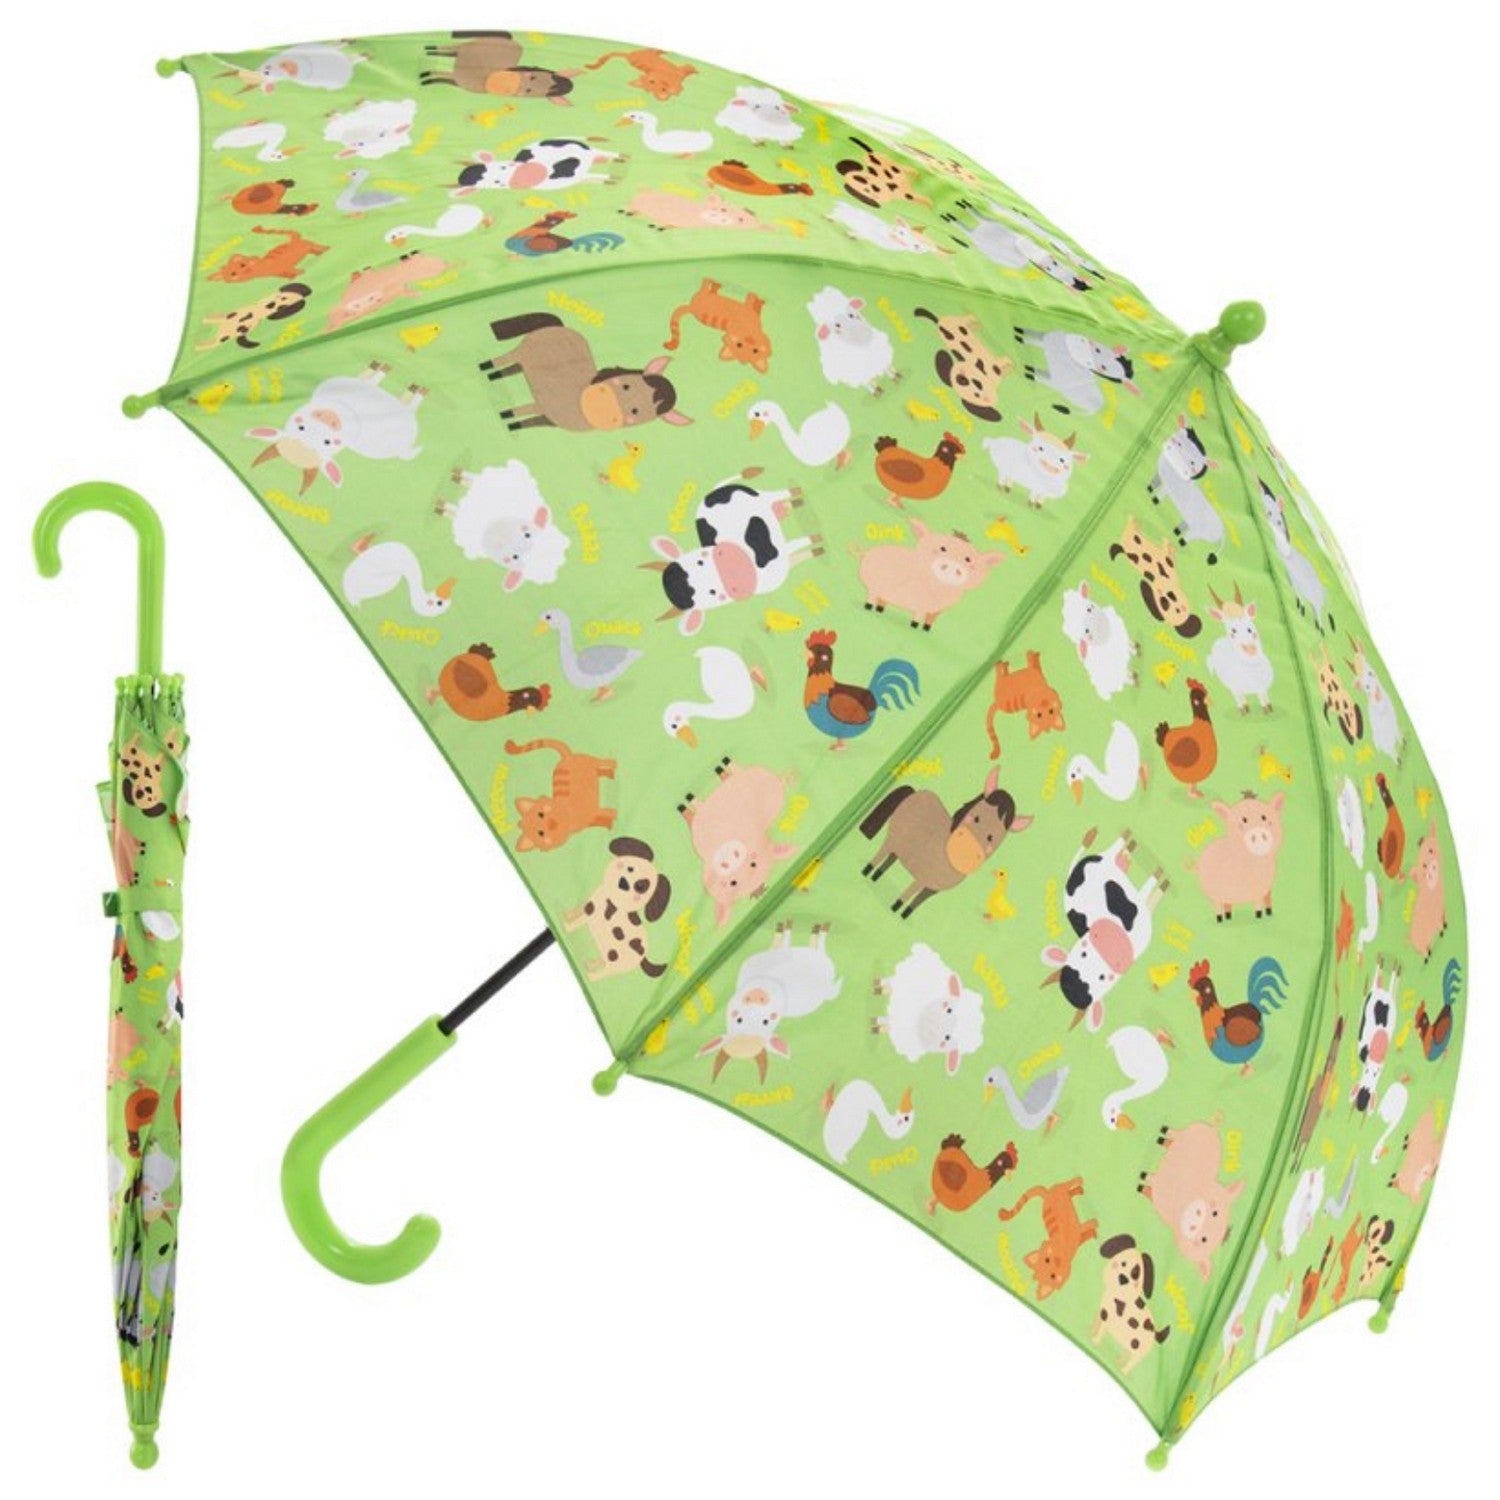 Farmyard Design Kids Umbrella